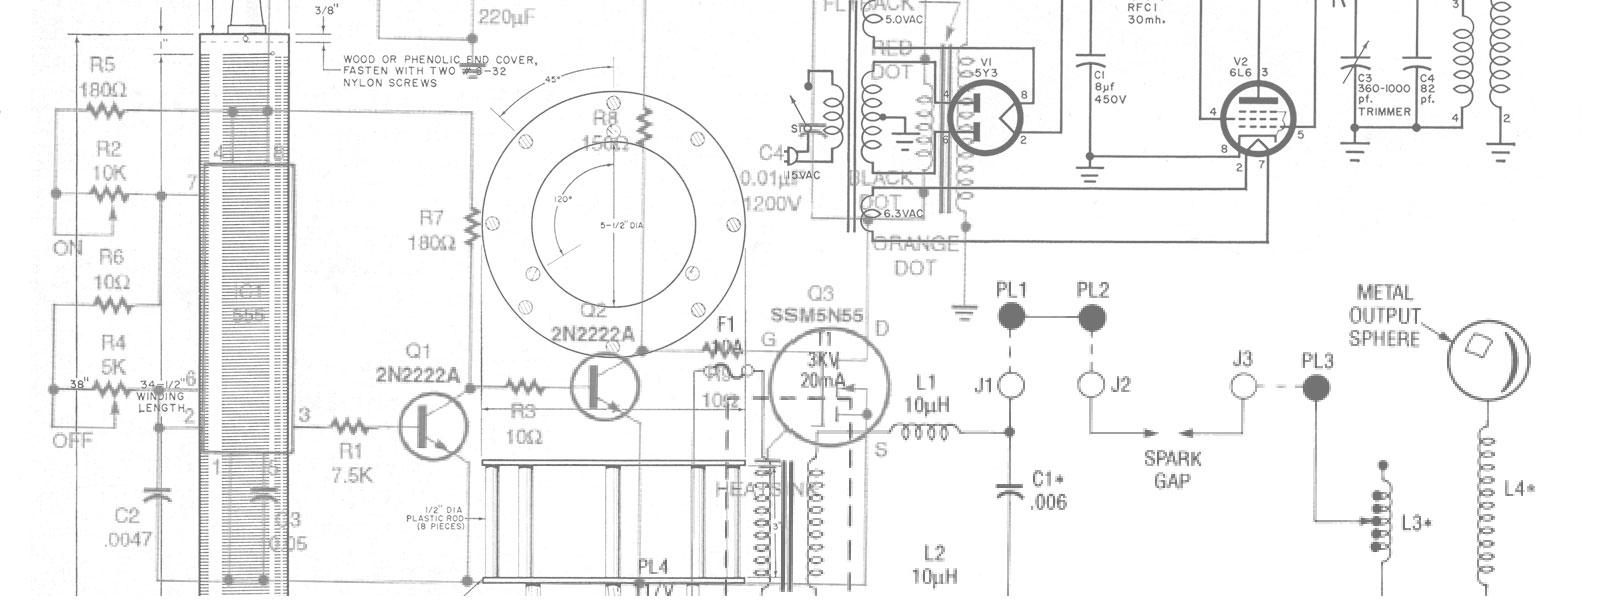 Schematics from Tesla coil plans